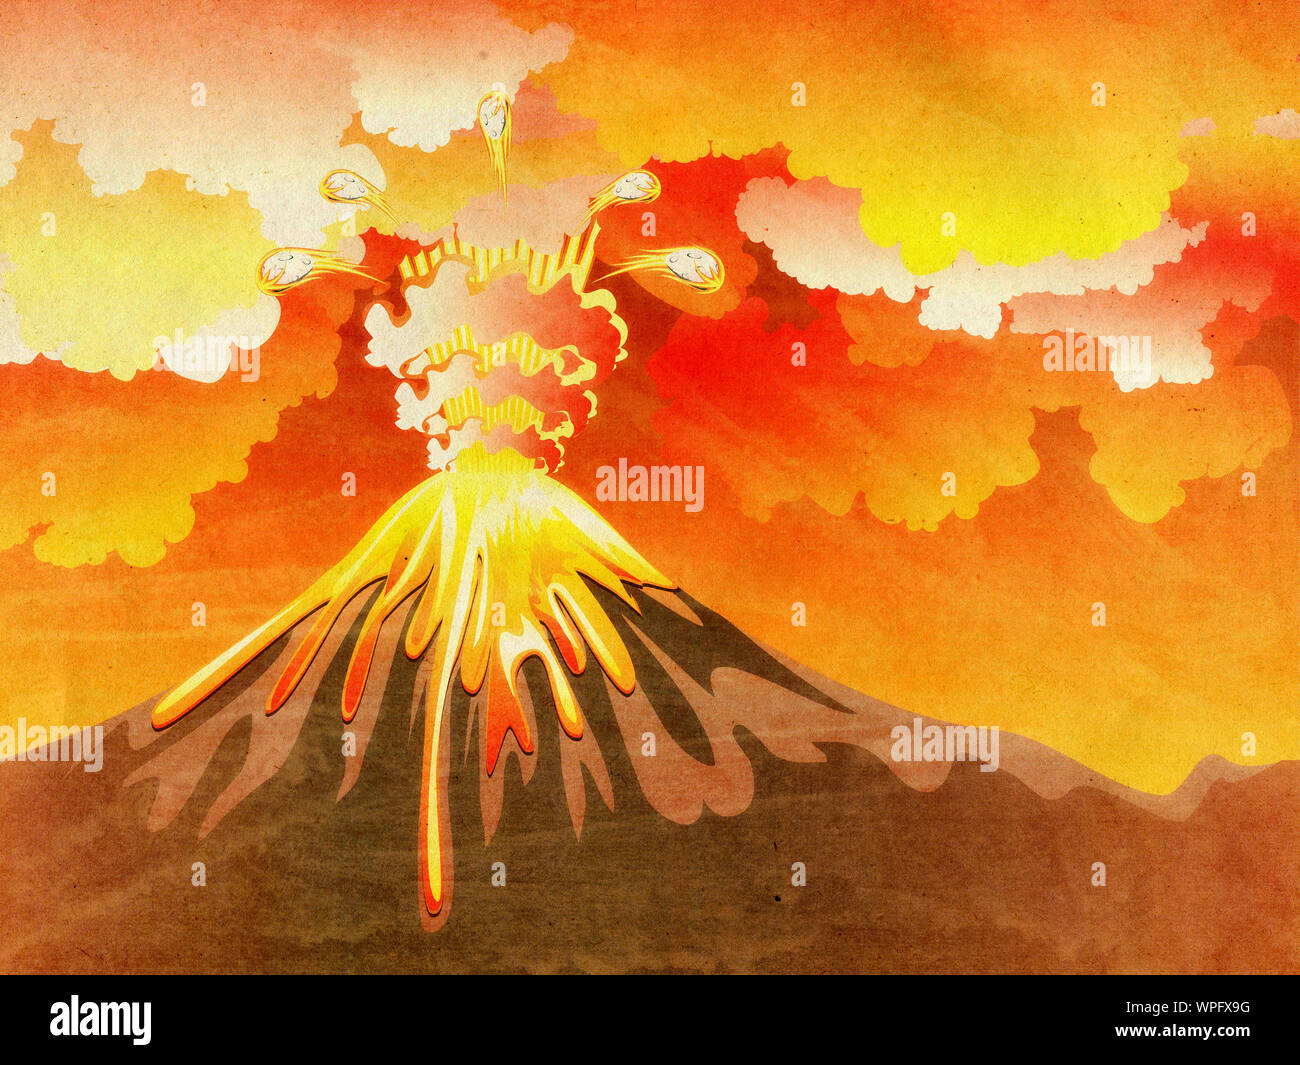 Illustration of cartoon volcano eruption with hot lava, grunge background  Stock Photo - Alamy